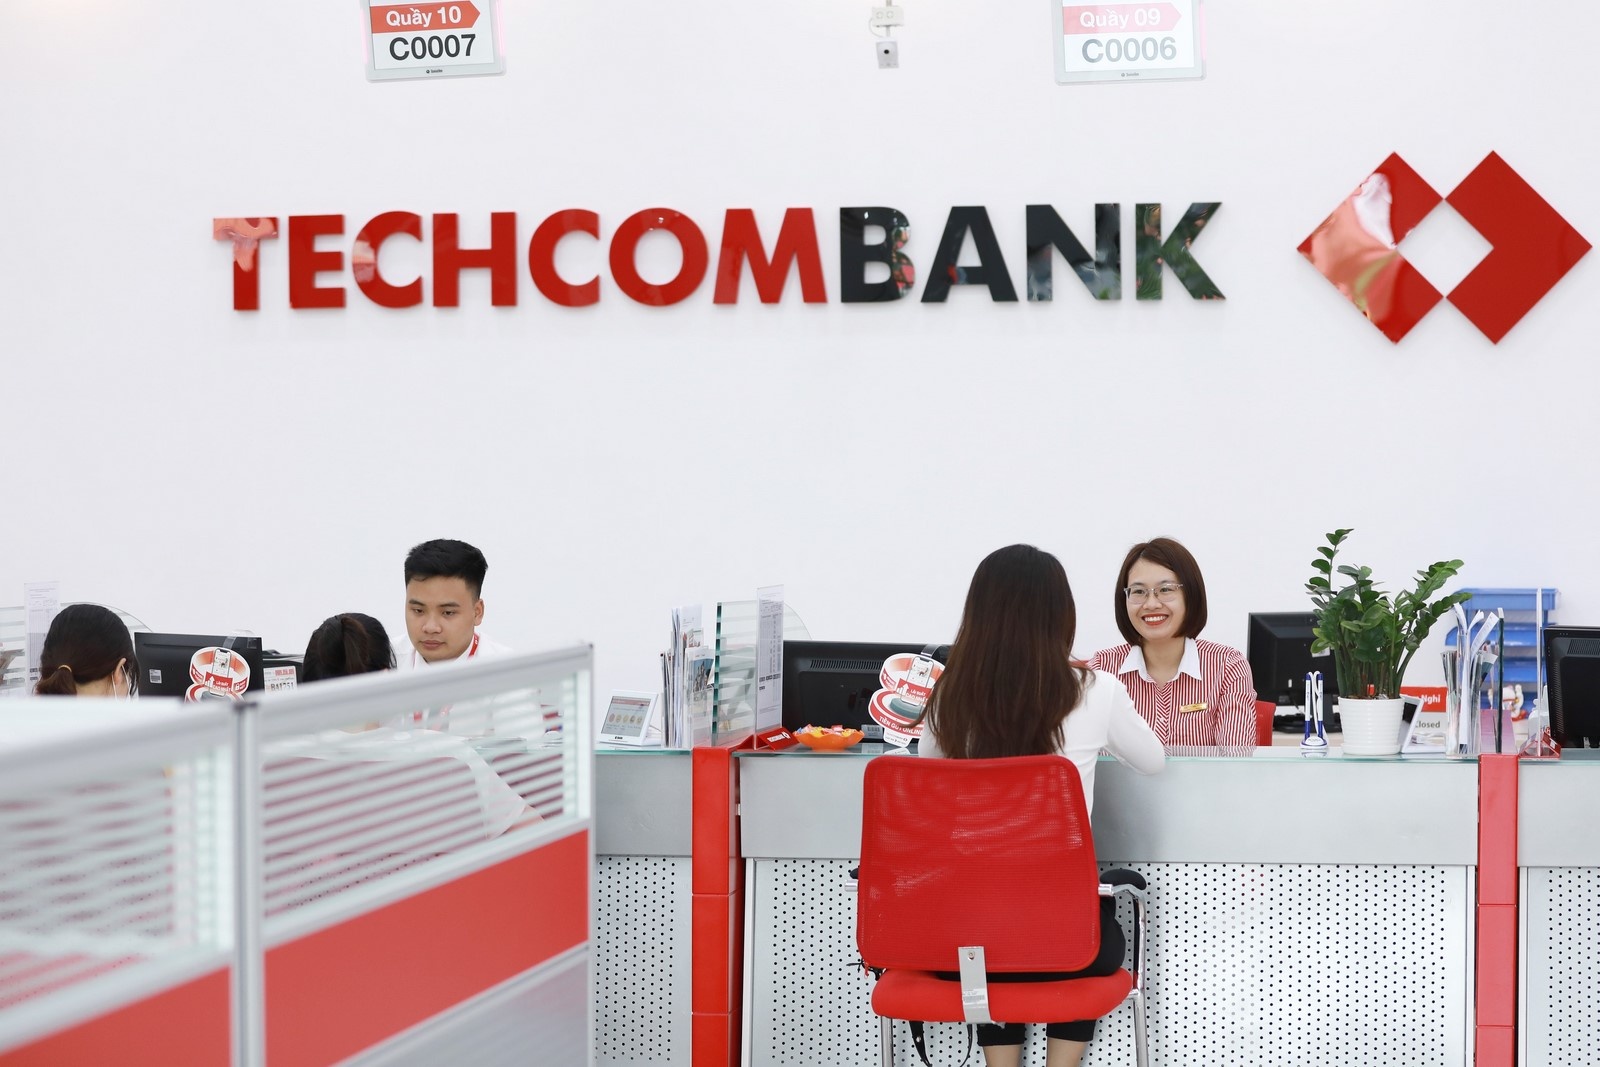 techcombank ket thuc thanh cong qua trinh thuc hien chien luoc 2016 2020